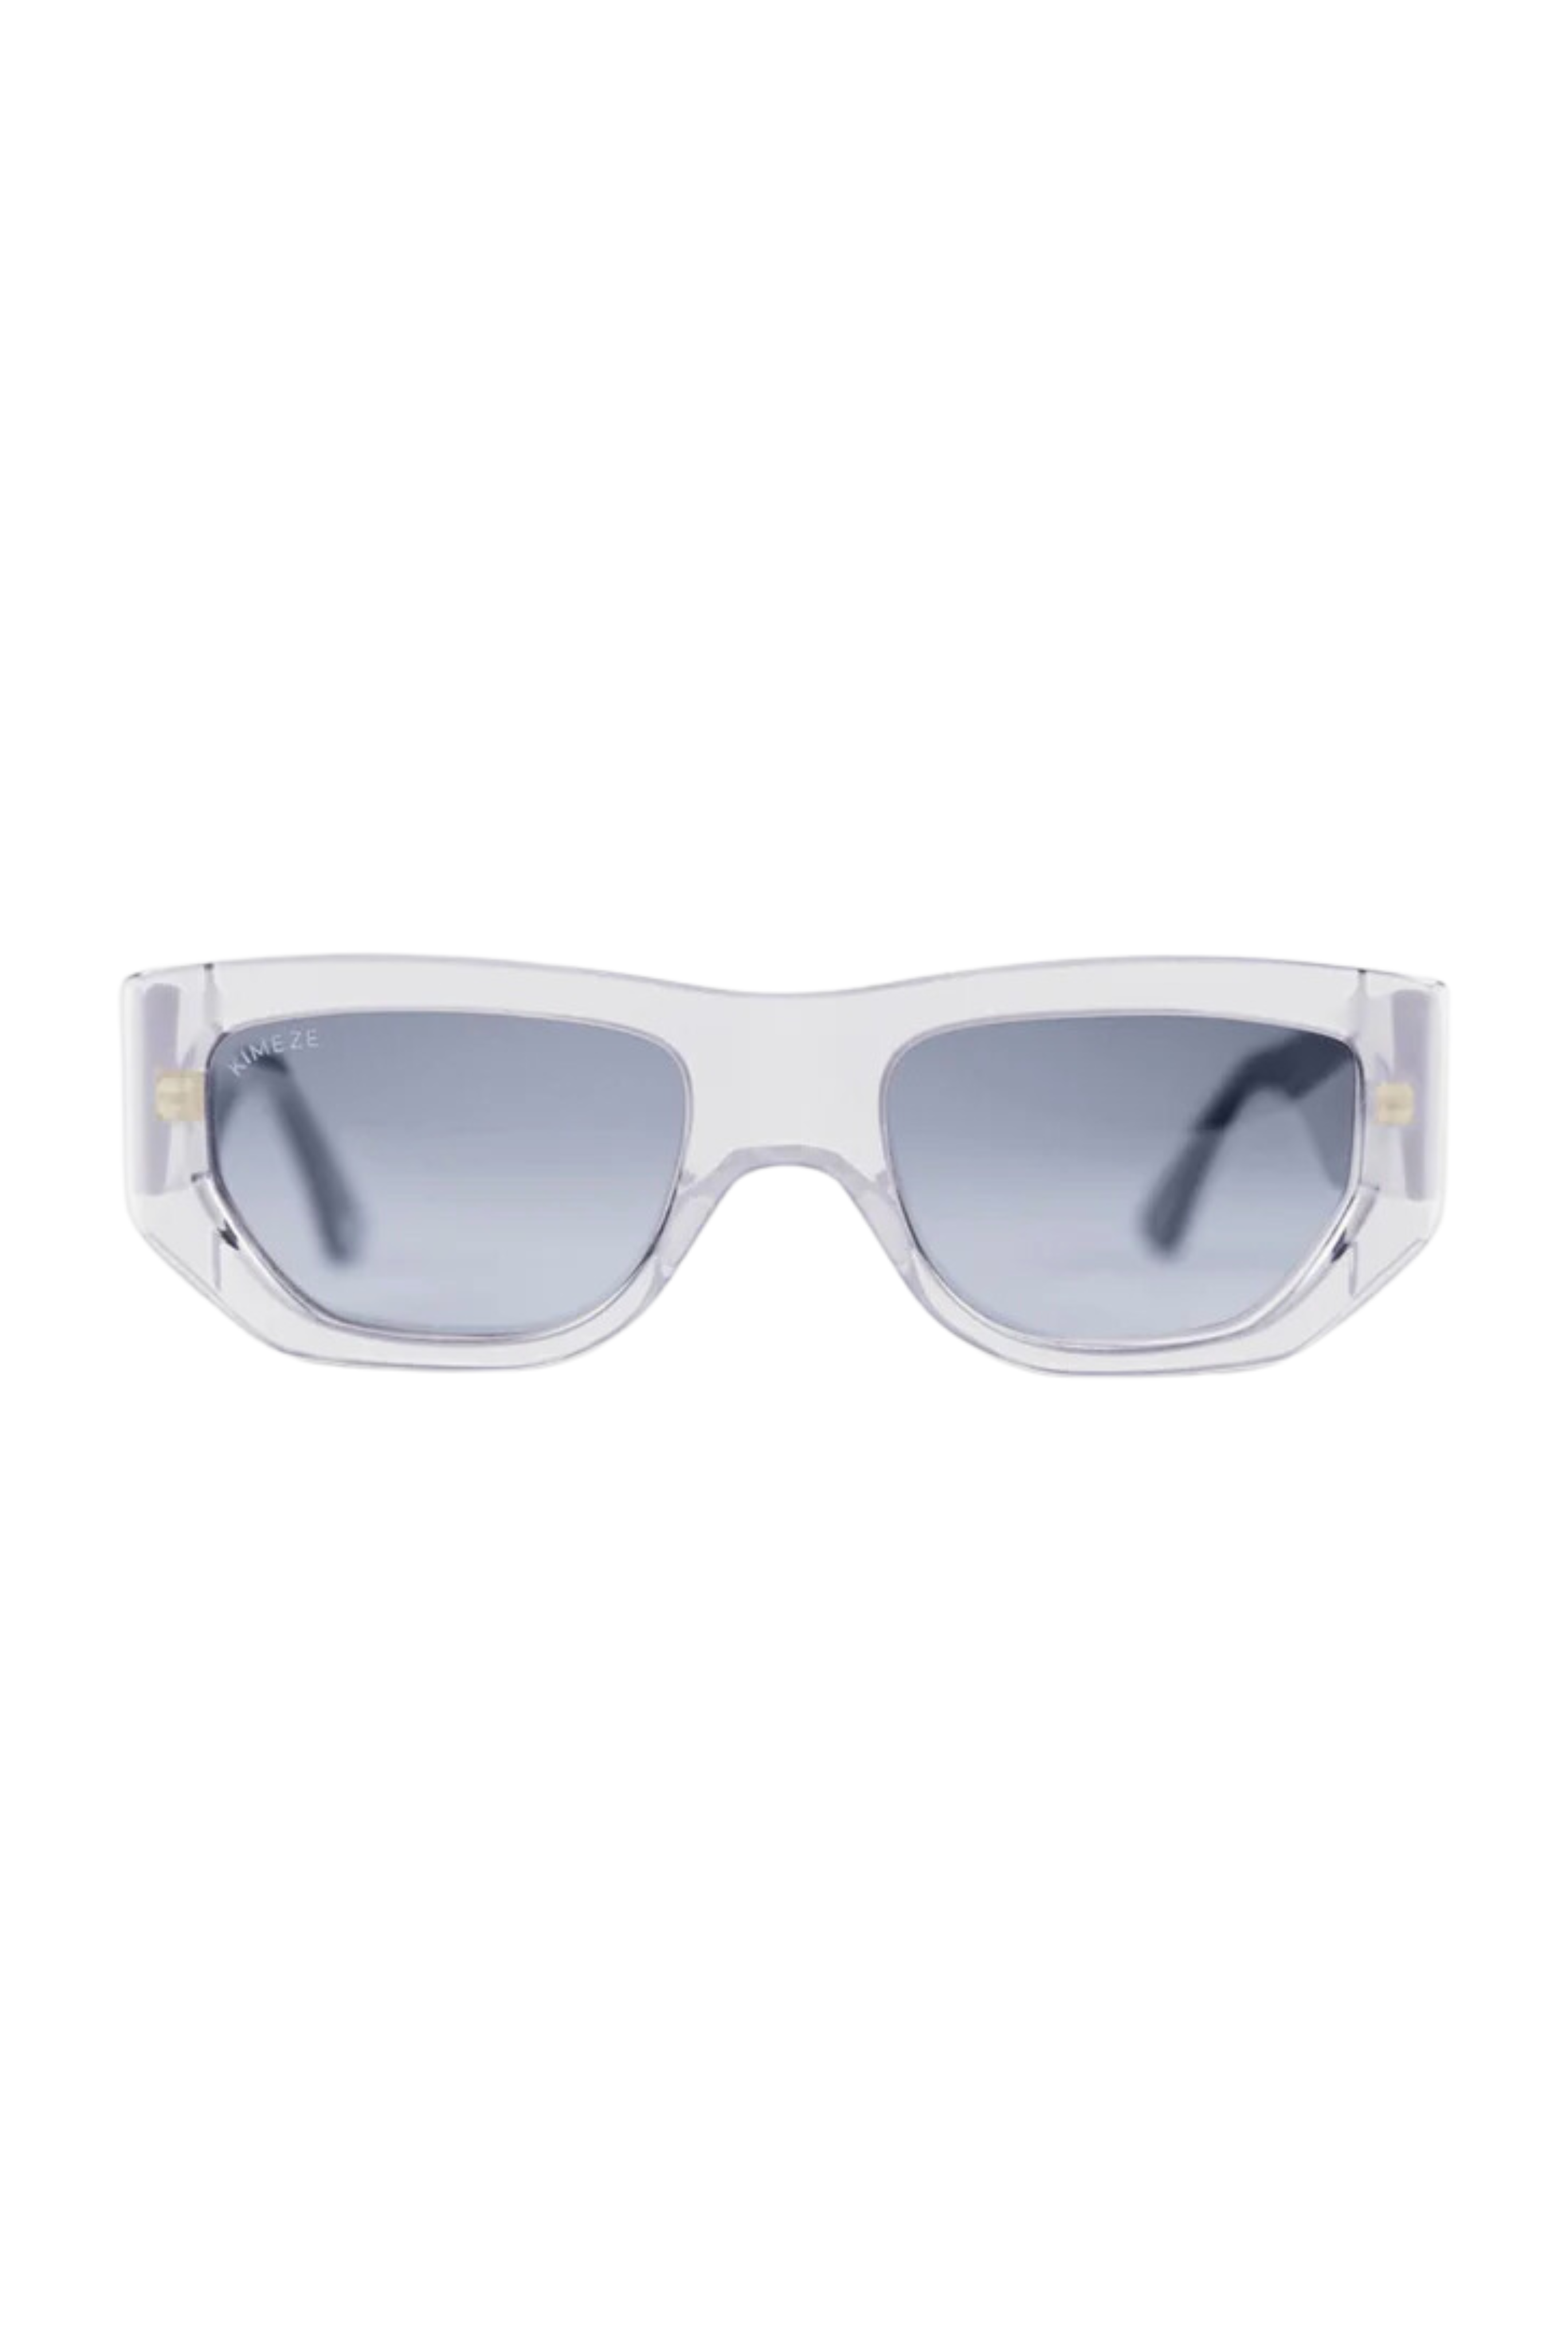 KIMEZE Concept 1 Sunglasses